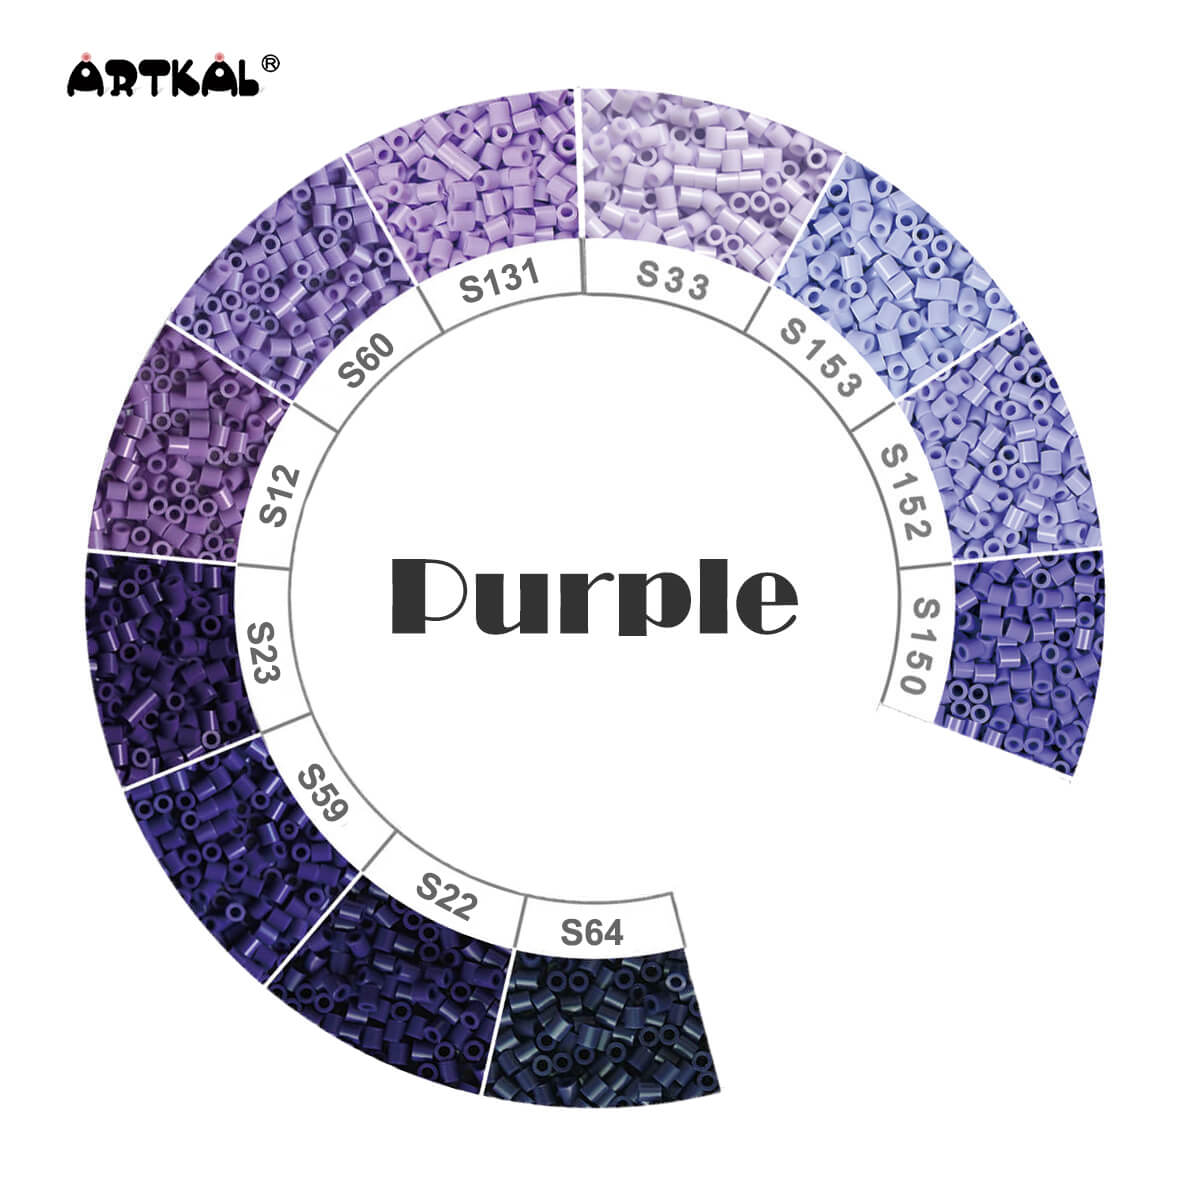 1000 Beads - Purple